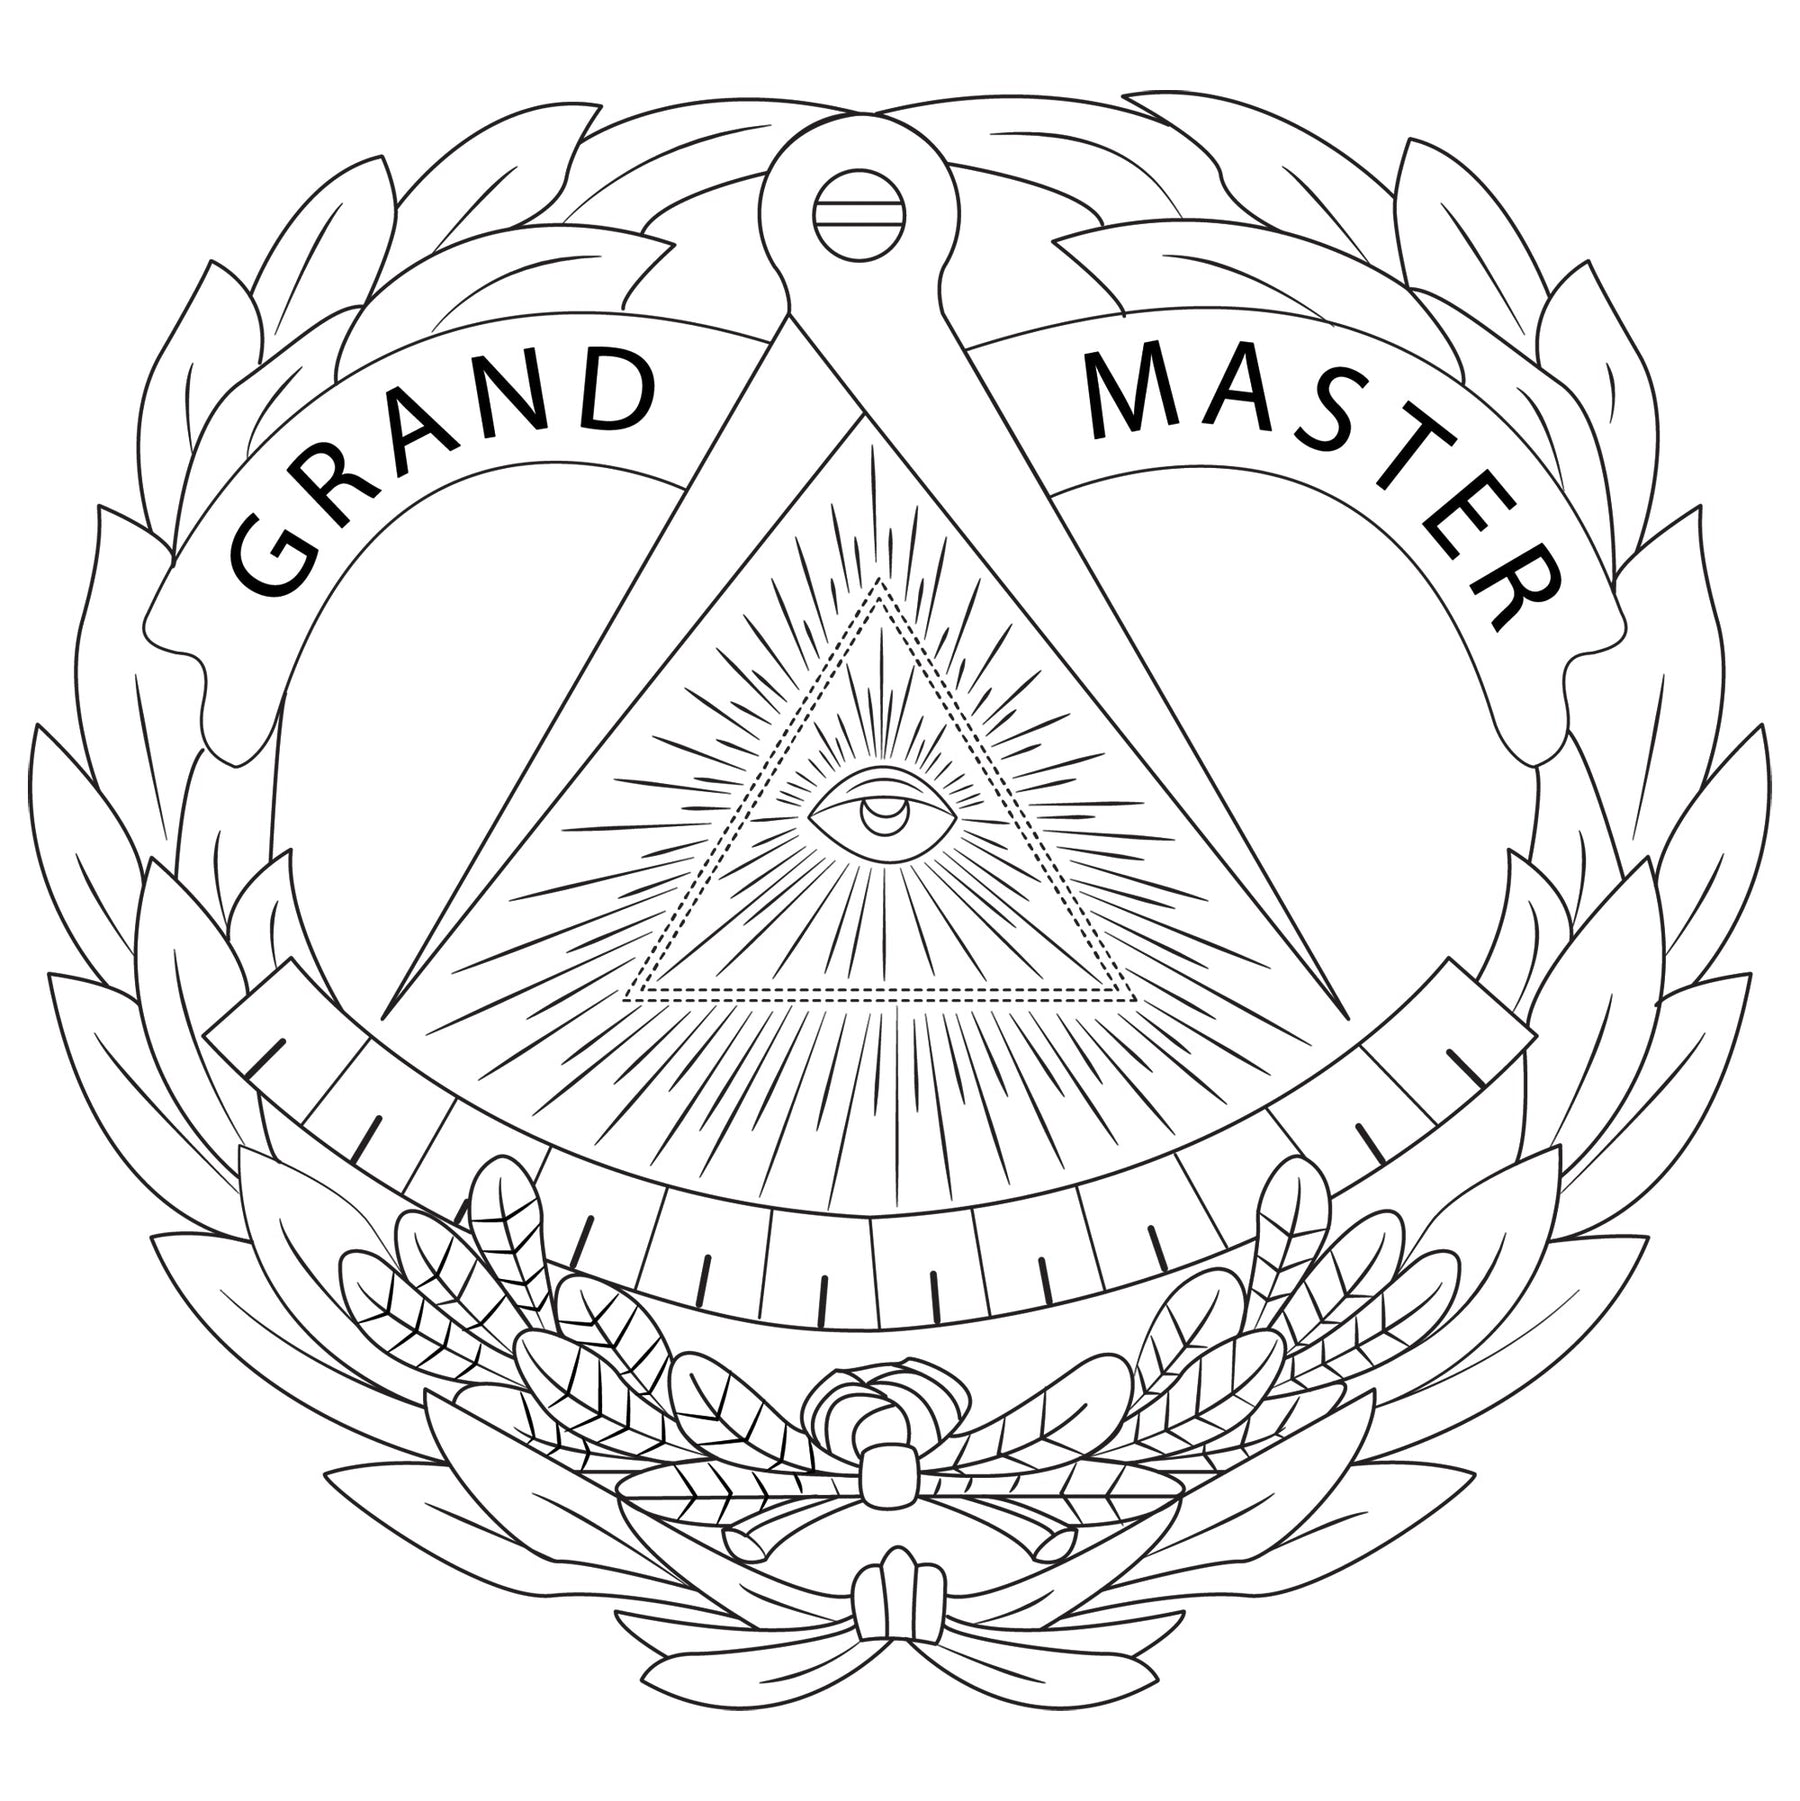 Grand Master Blue Lodge Flask - 2 Shot Glasses & Funnel - Bricks Masons